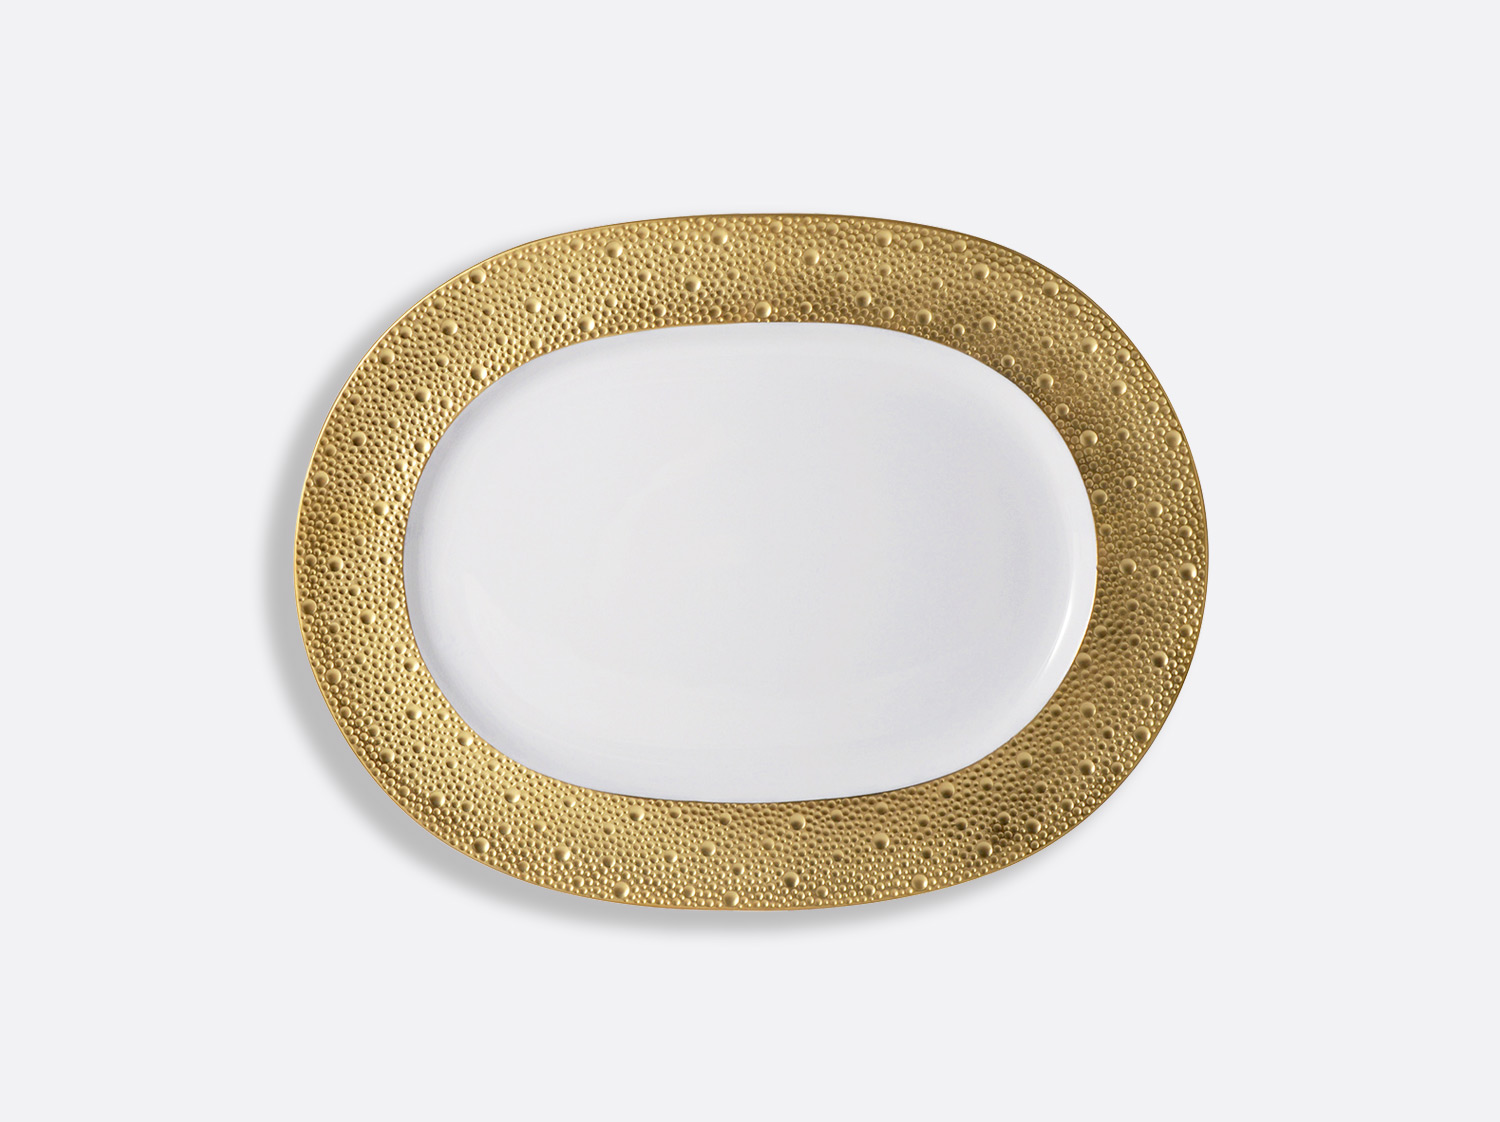 China Oval platter 17" of the collection Ecume gold | Bernardaud